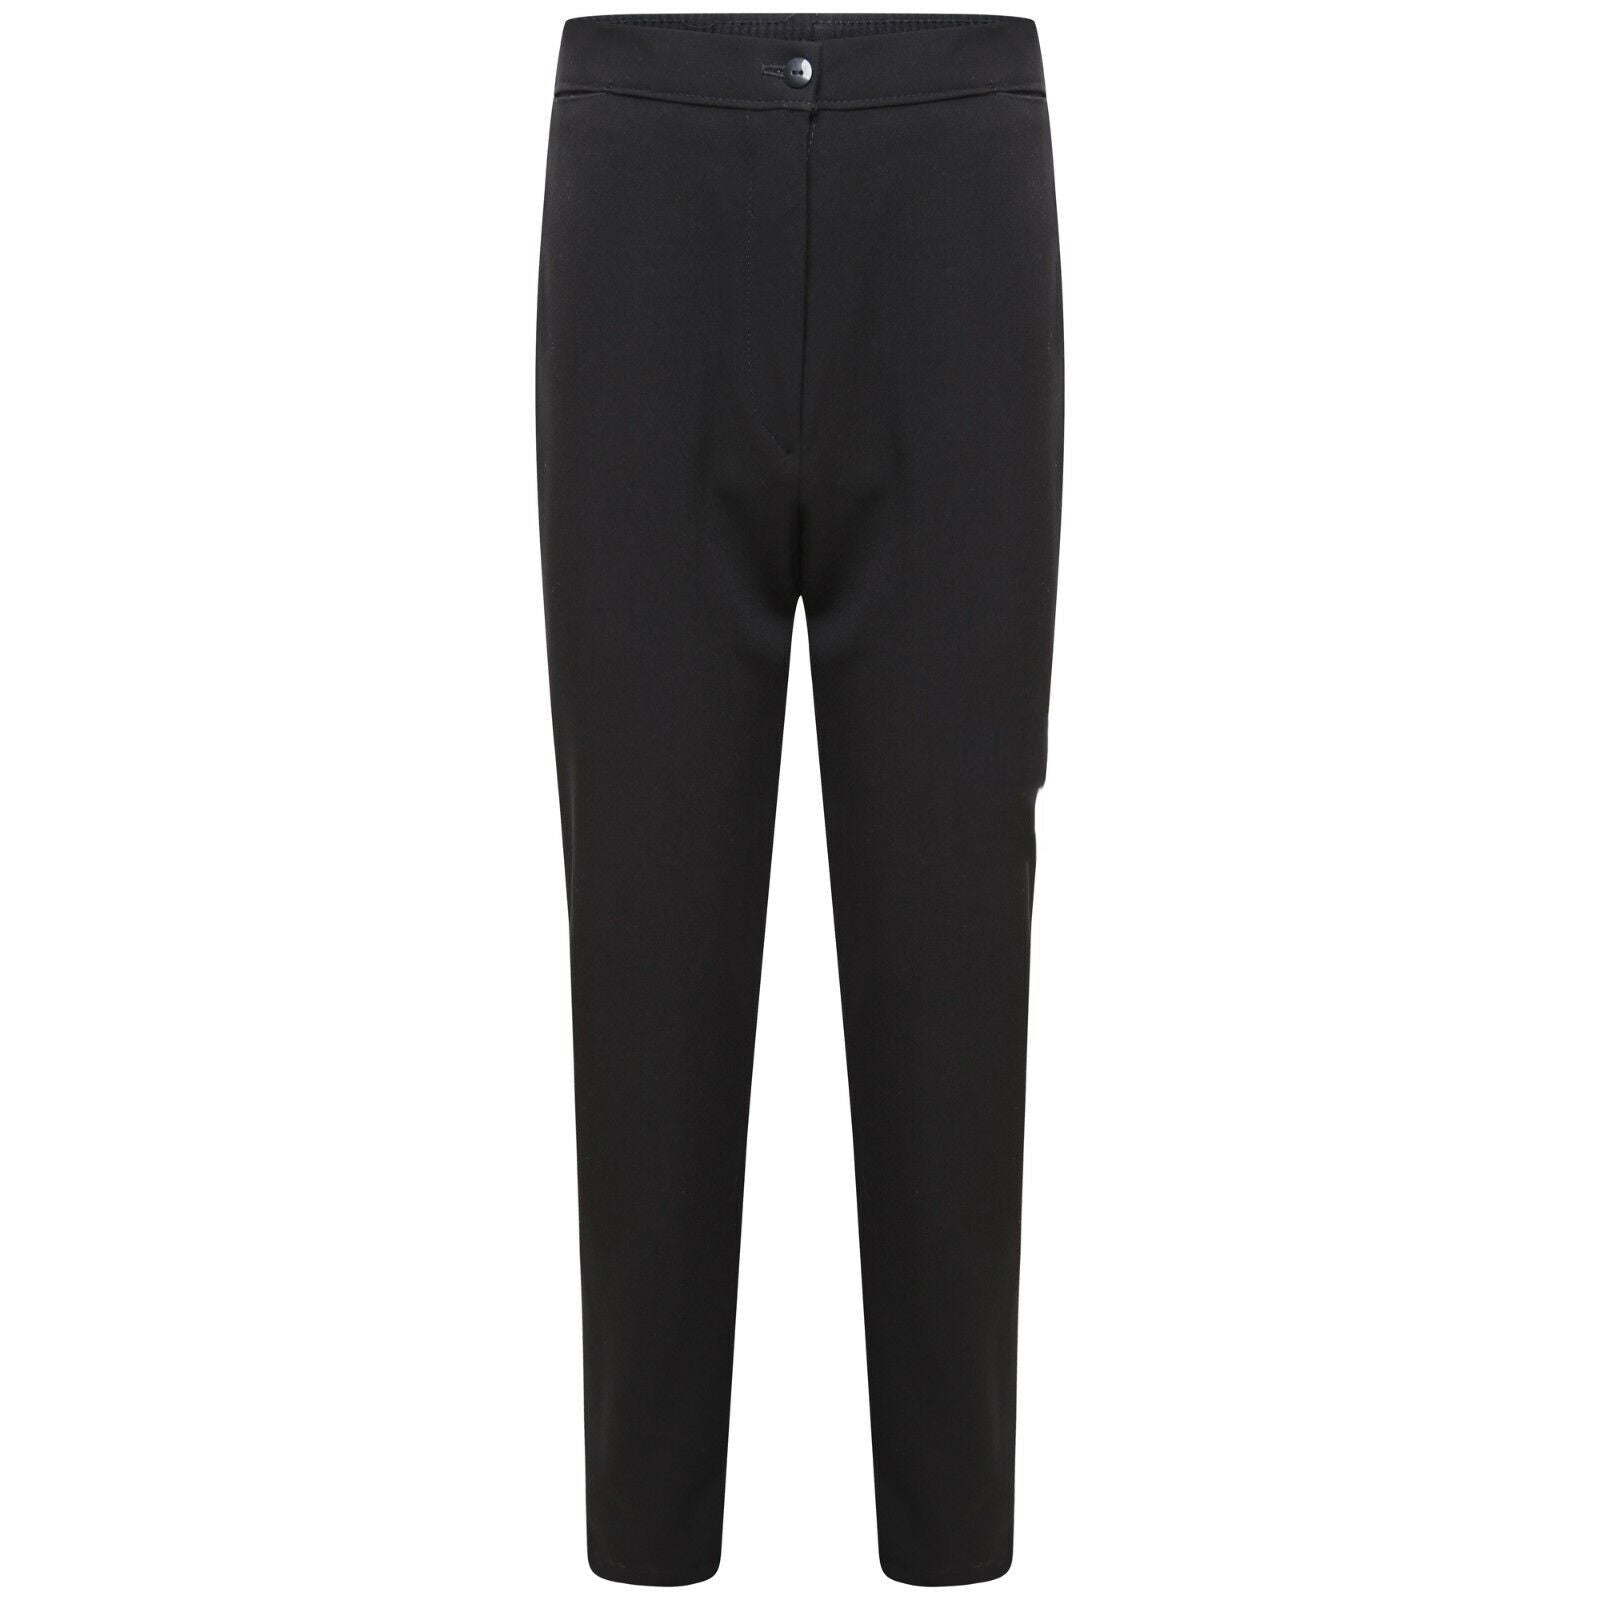 Girls School Uniform Comfortable Trousers Formal Pant Smart Fit -Black